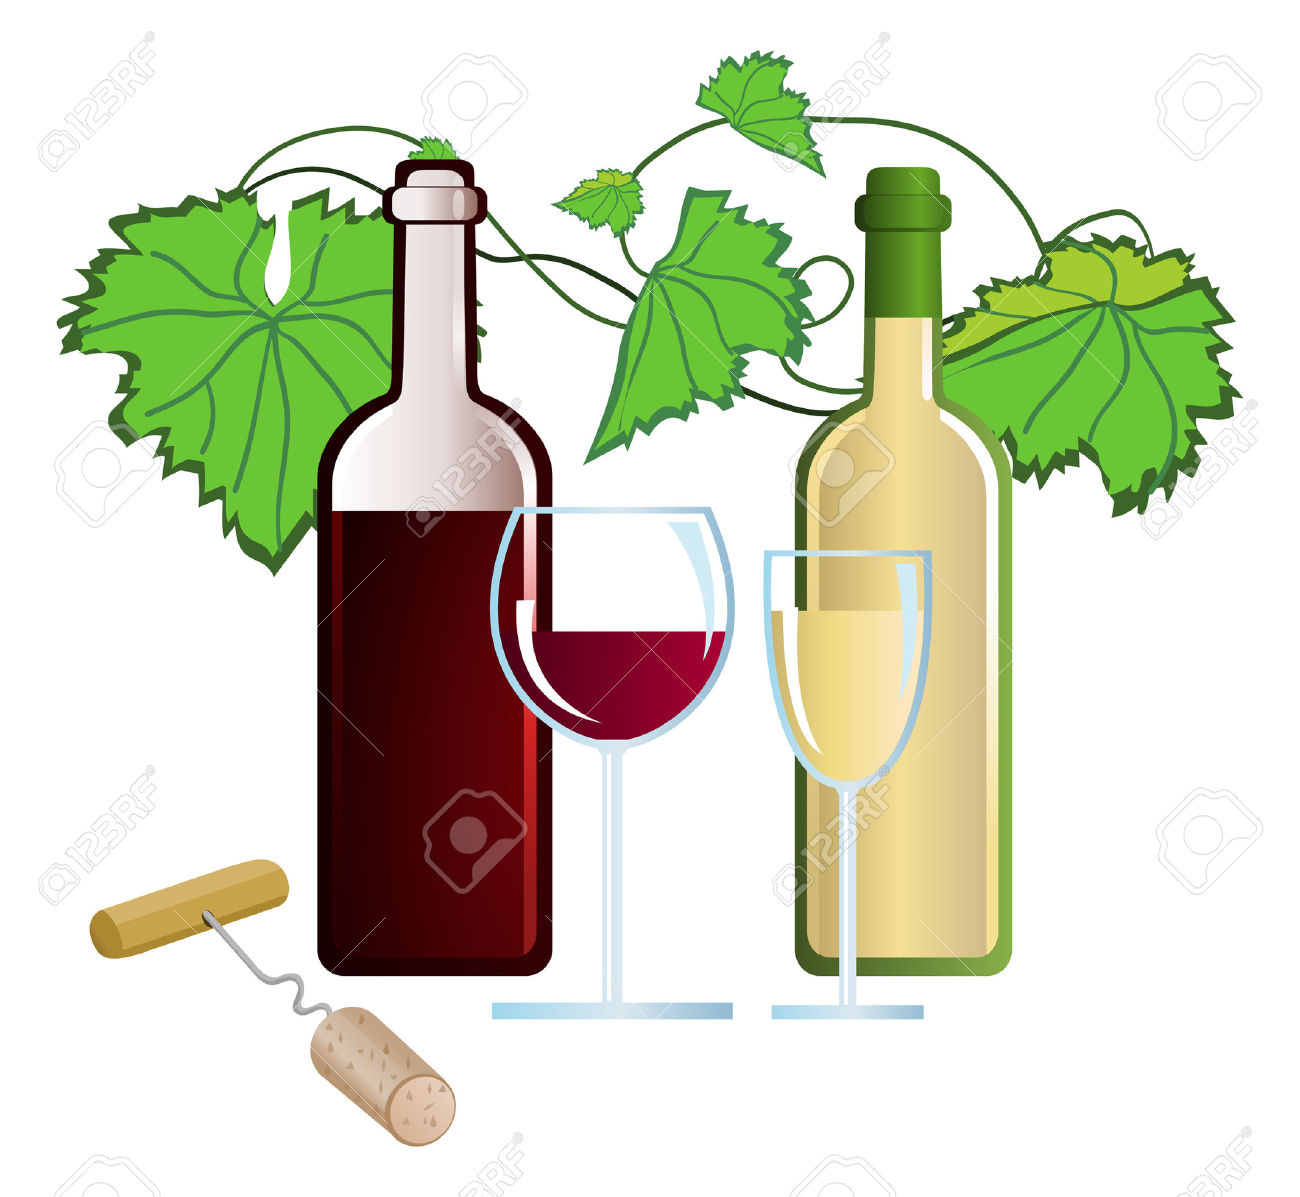 Clip-arts of wine and corkscrew Stock Vector - 5288191